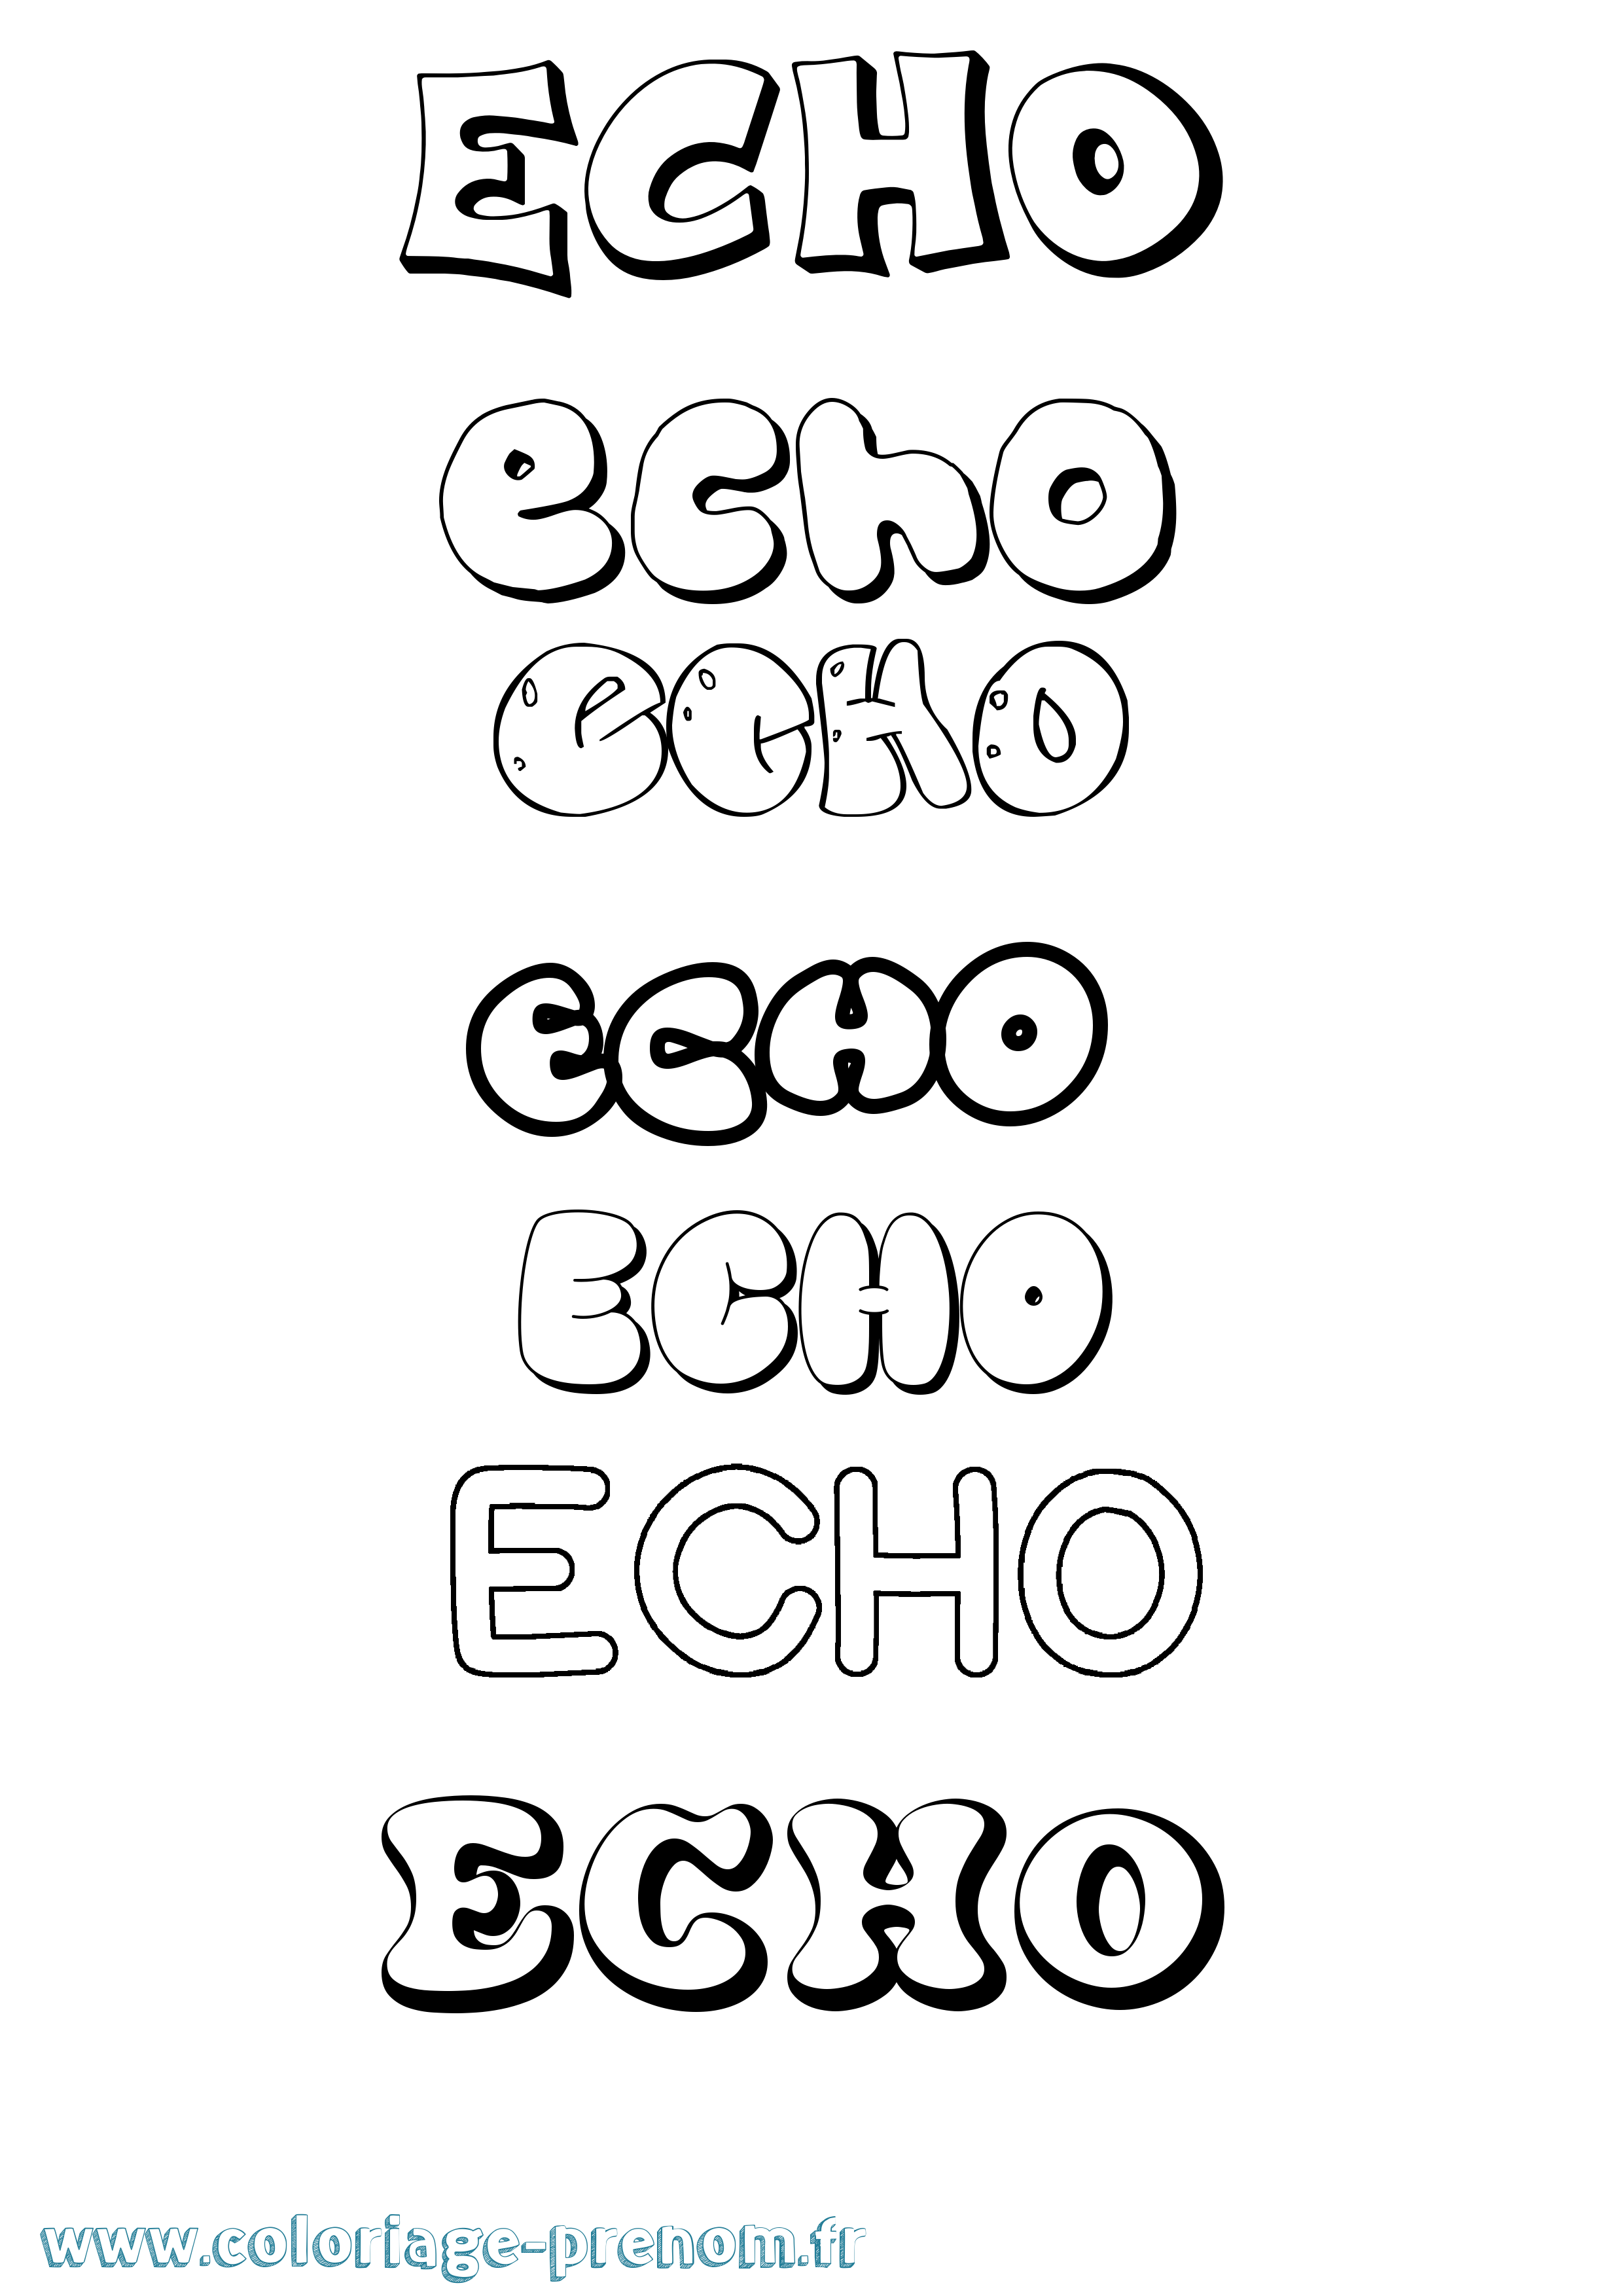 Coloriage prénom Echo Bubble